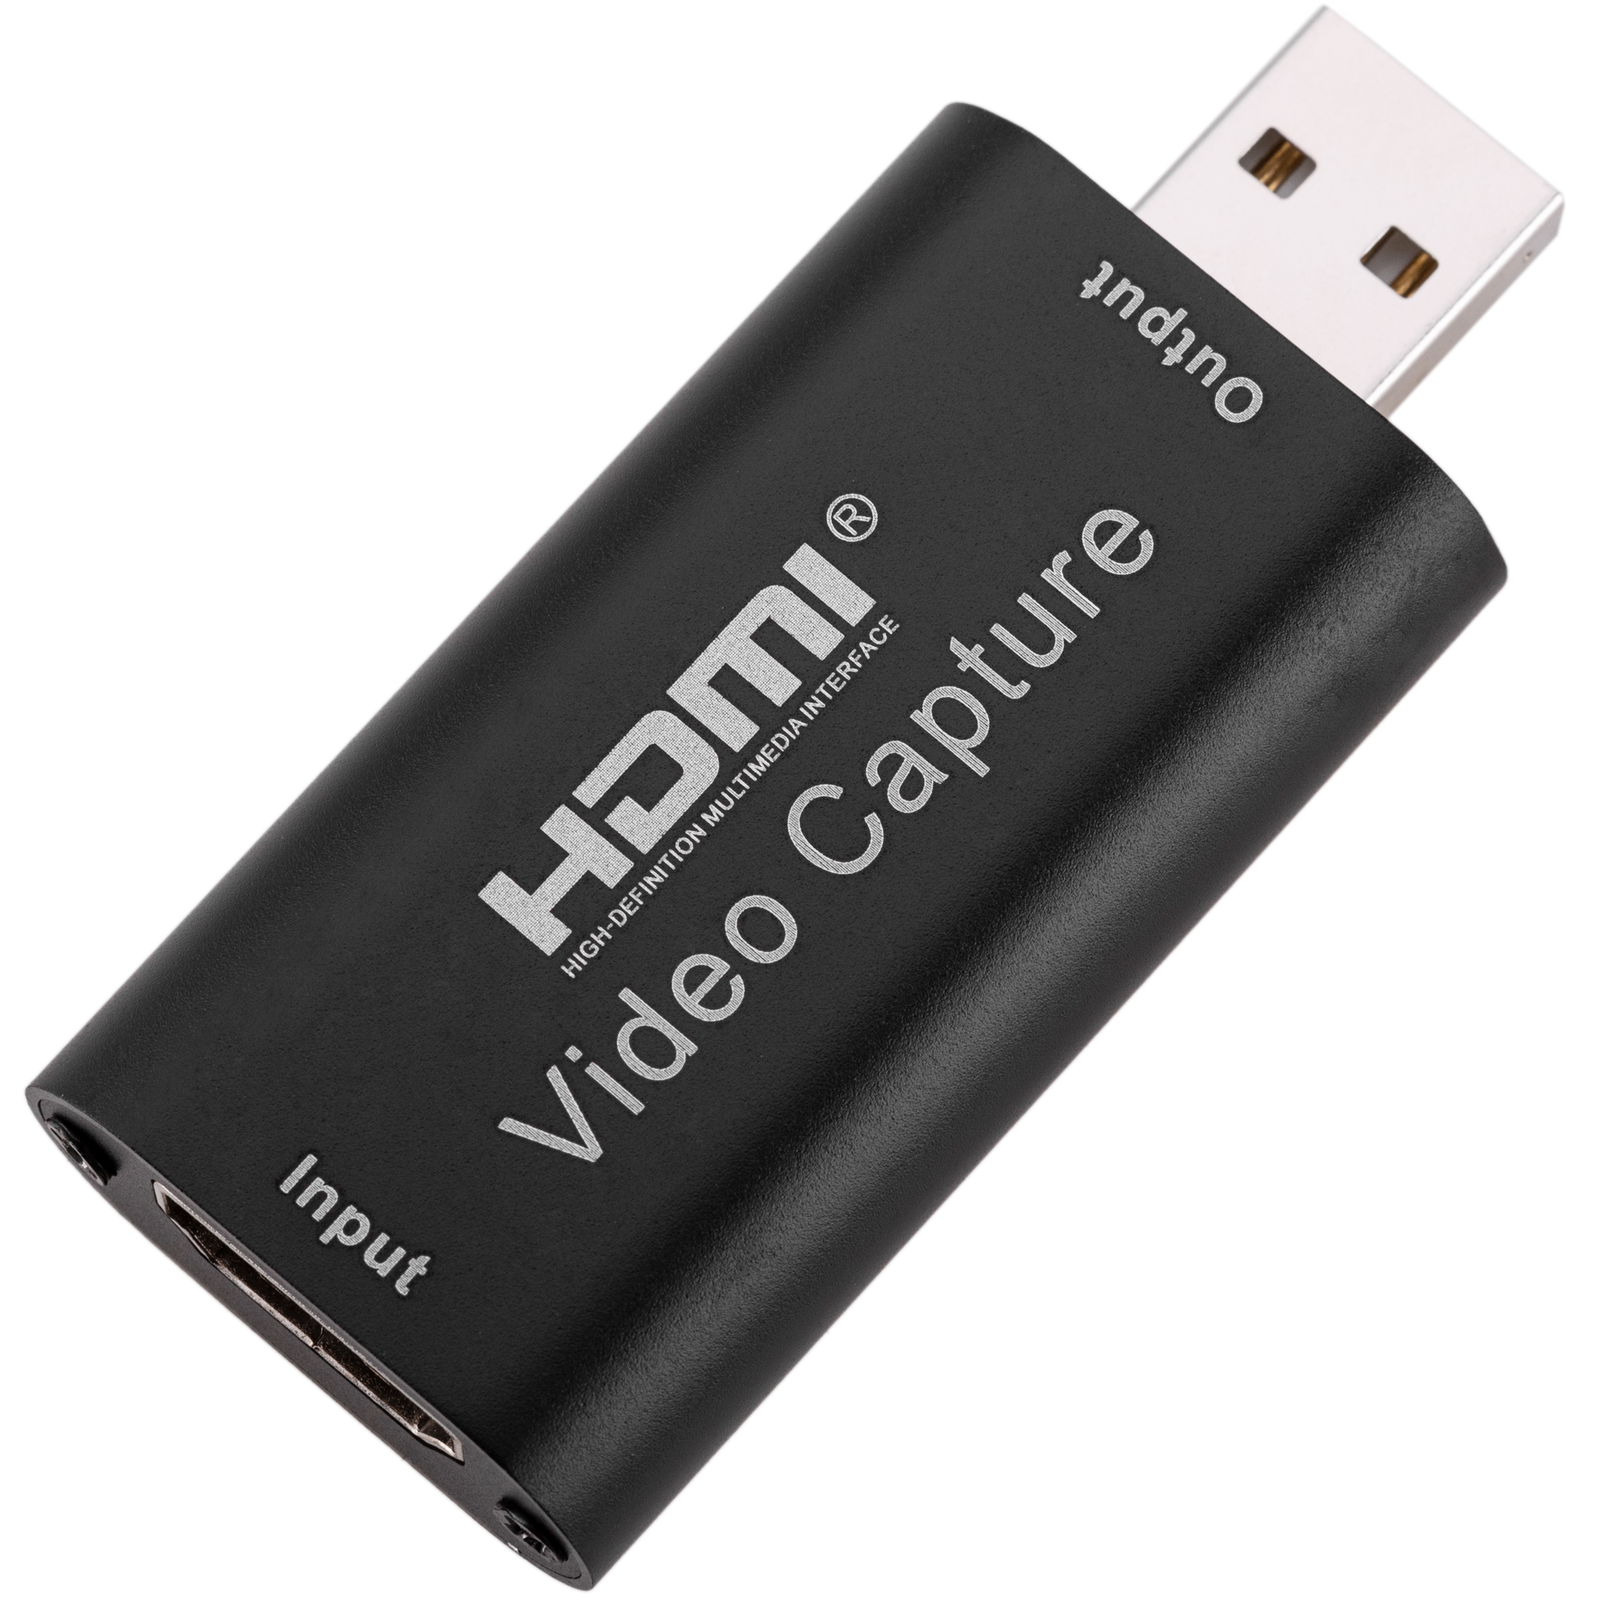 GENERICO Capturadora de Vídeo 4K HDMI Streaming USB 3.0 - Negro